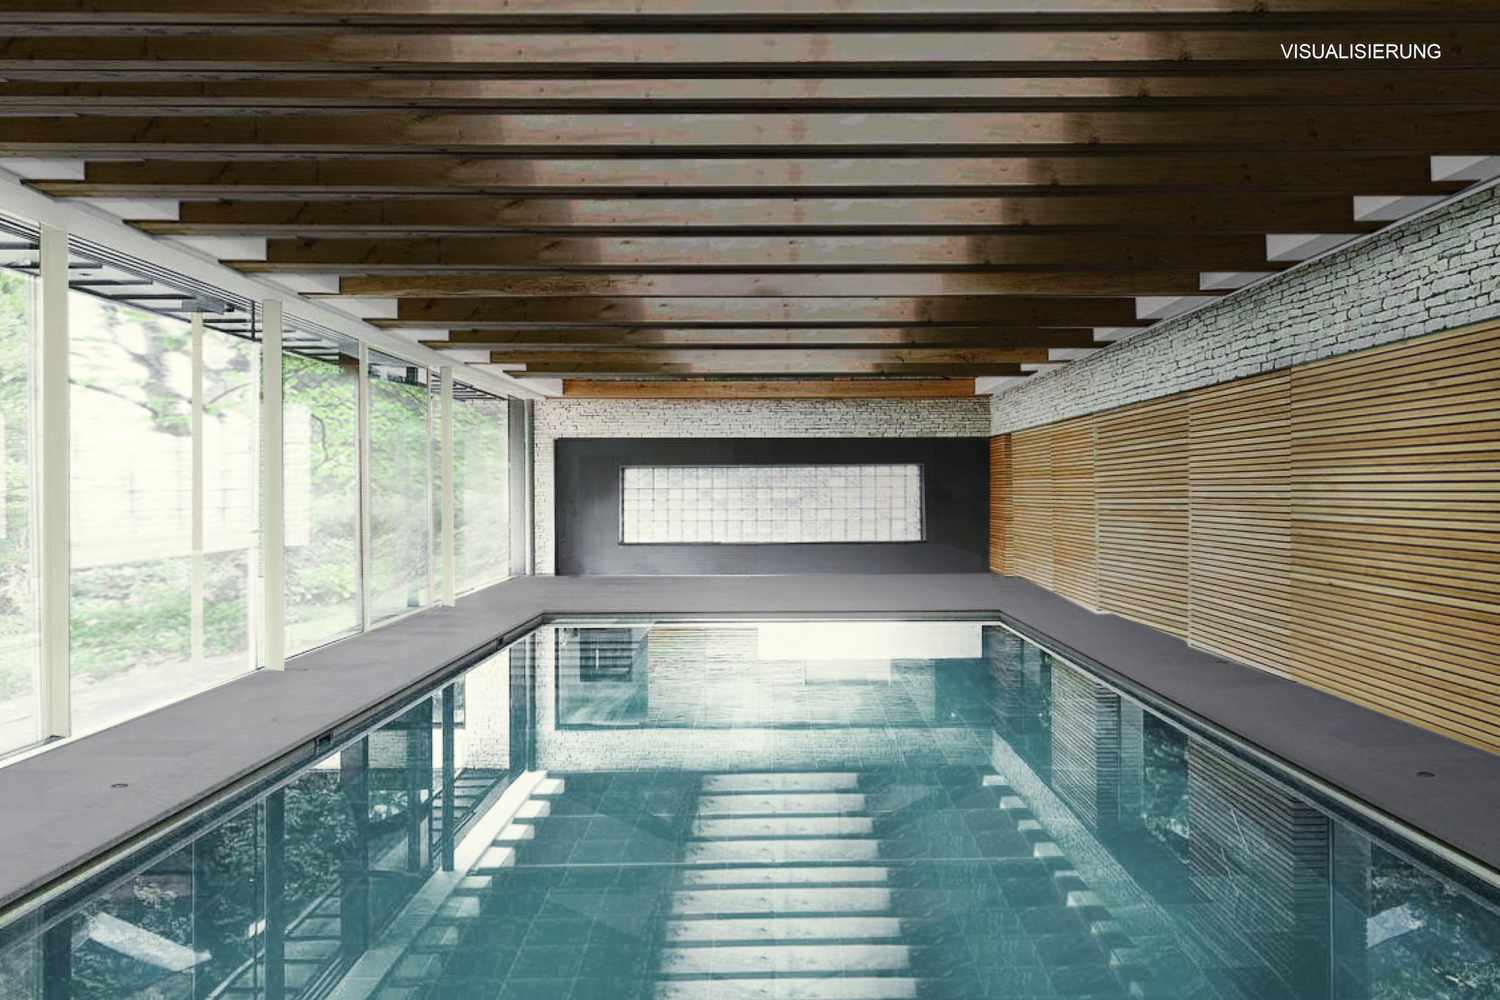 indoor swimming pool ideas